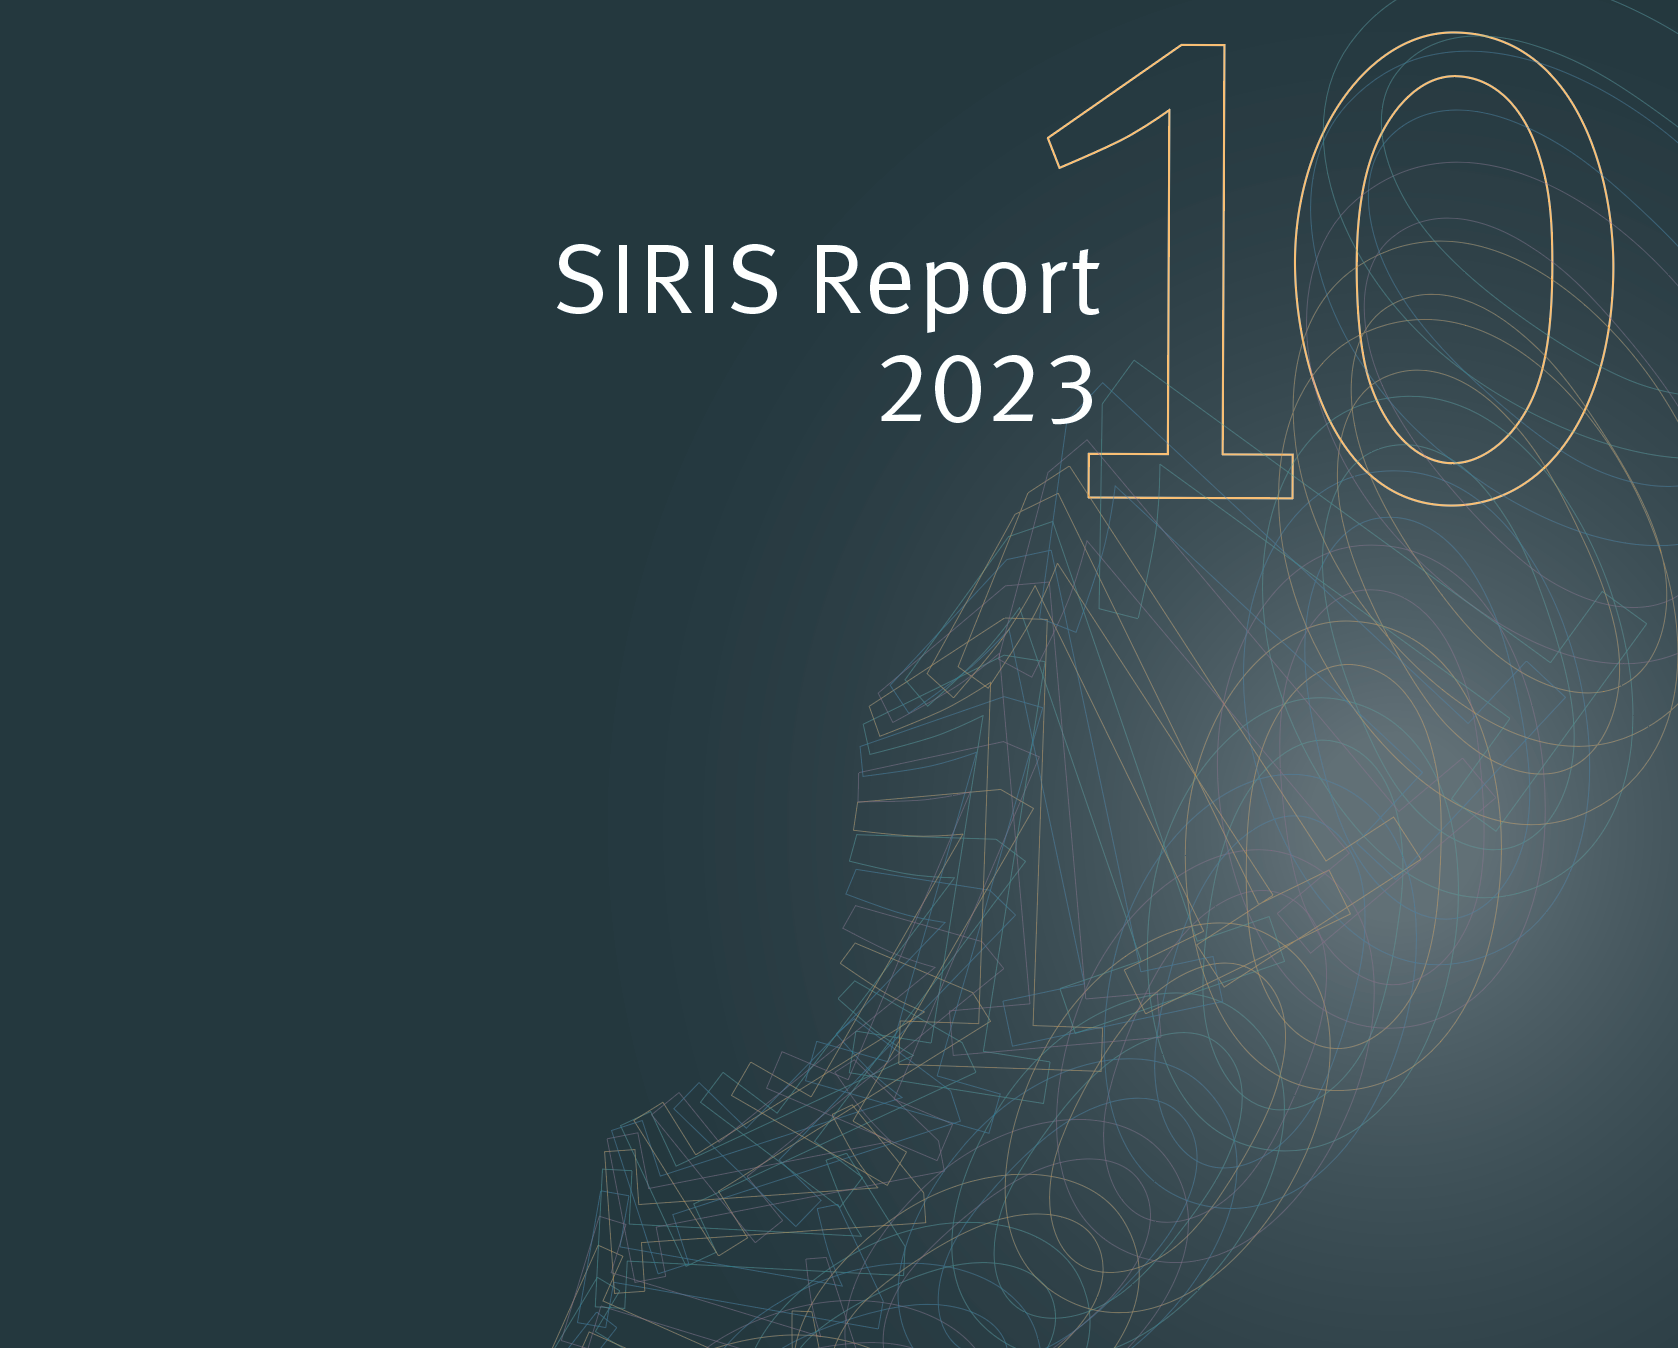 SIRIS Report 2023 - Online order